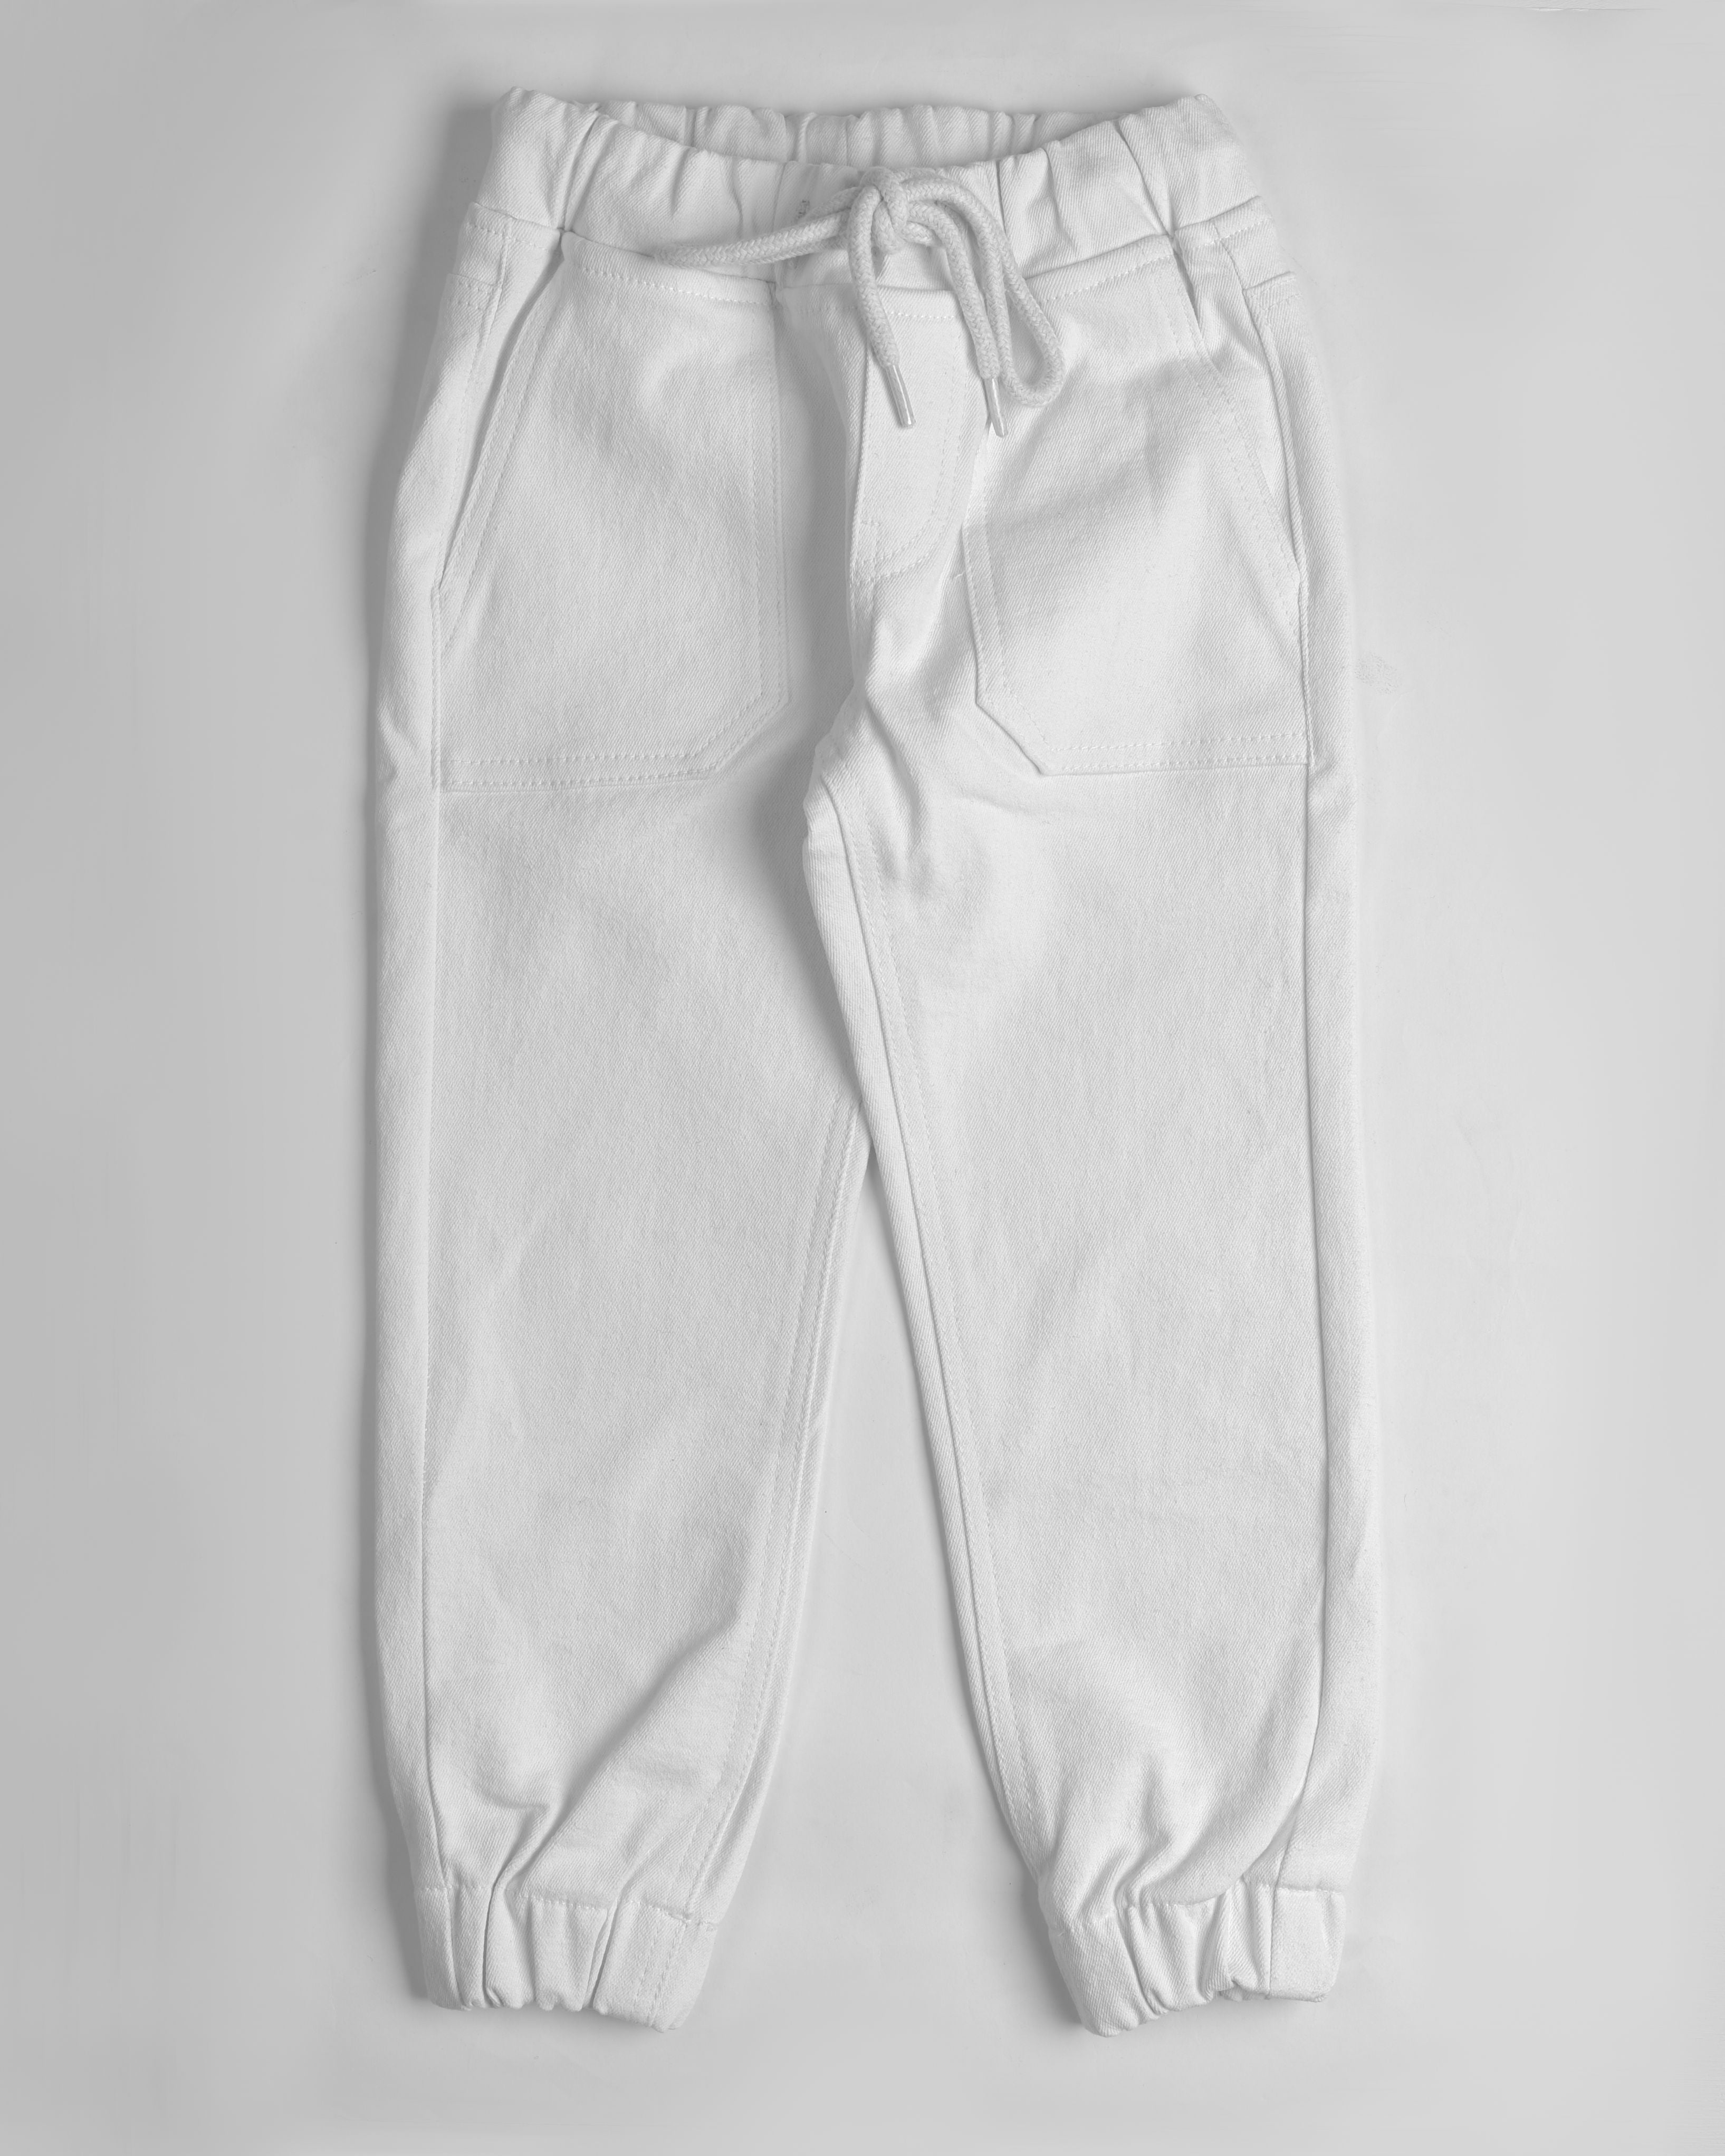 White jogger jeans